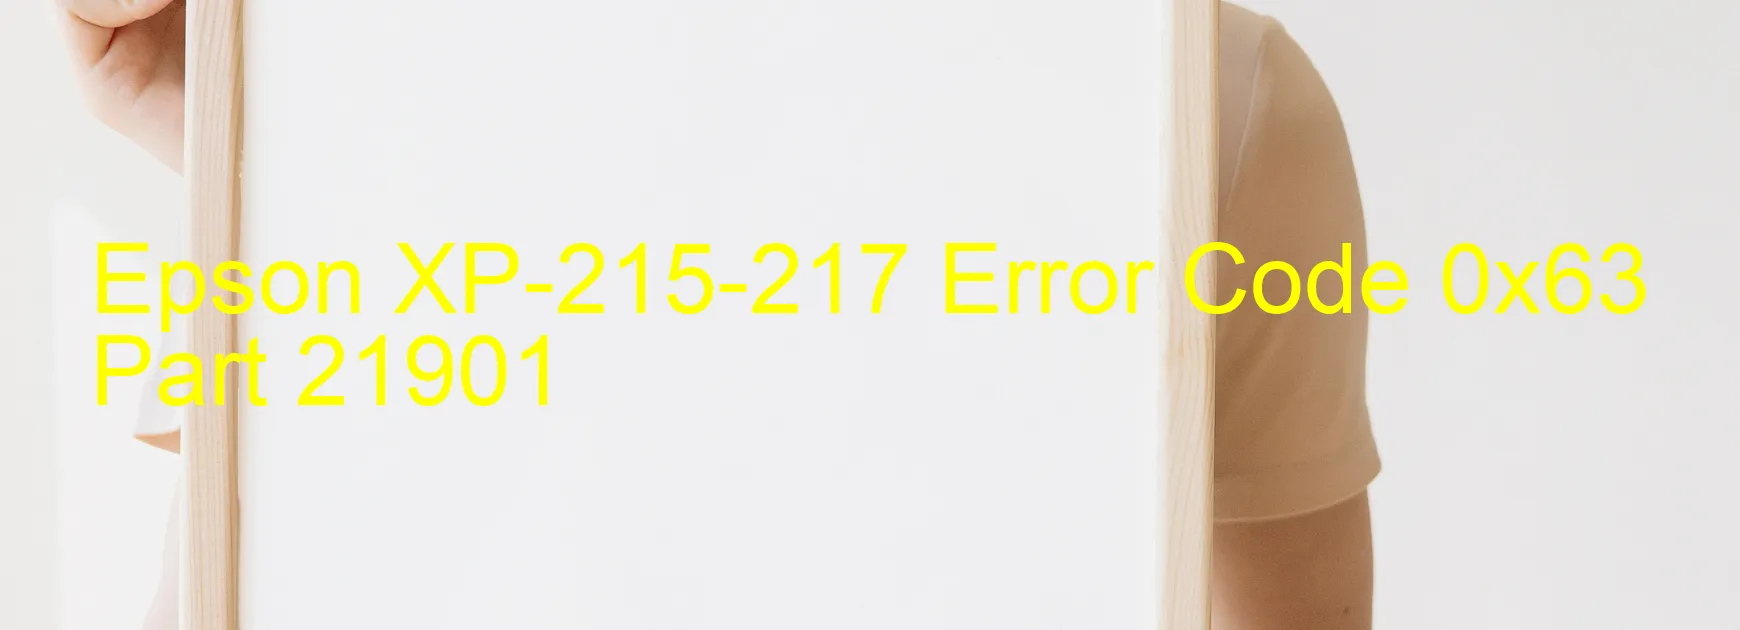 Epson XP-215-217 Error Code 0x63 Part 21901